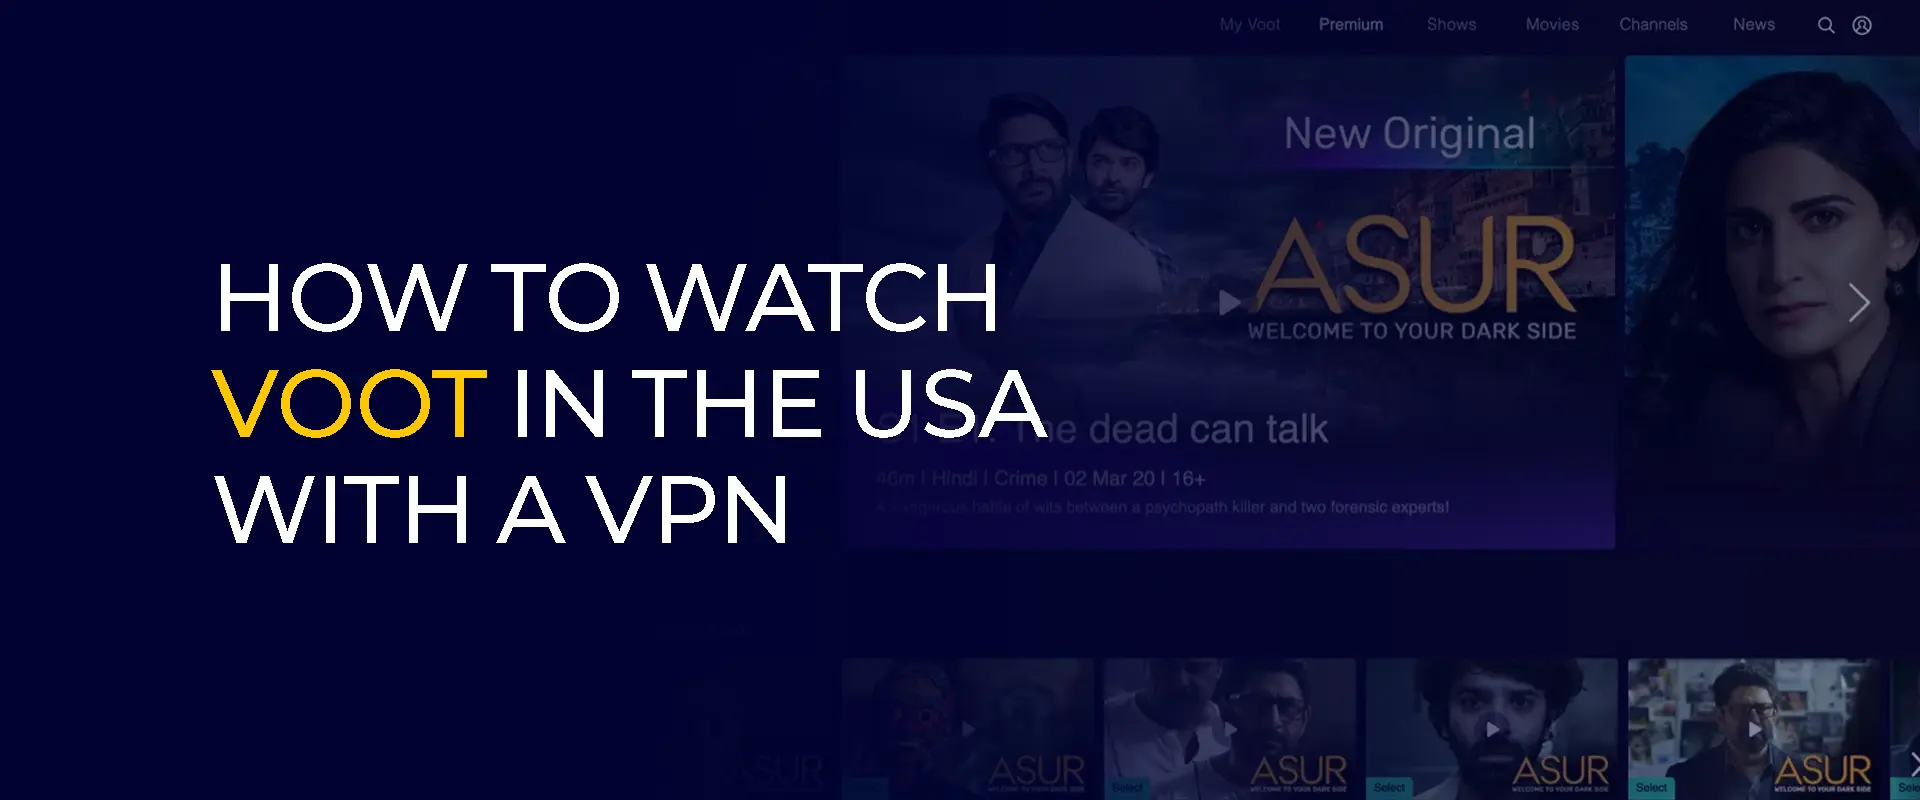 Jak oglądać Voot w USA za pomocą VPN